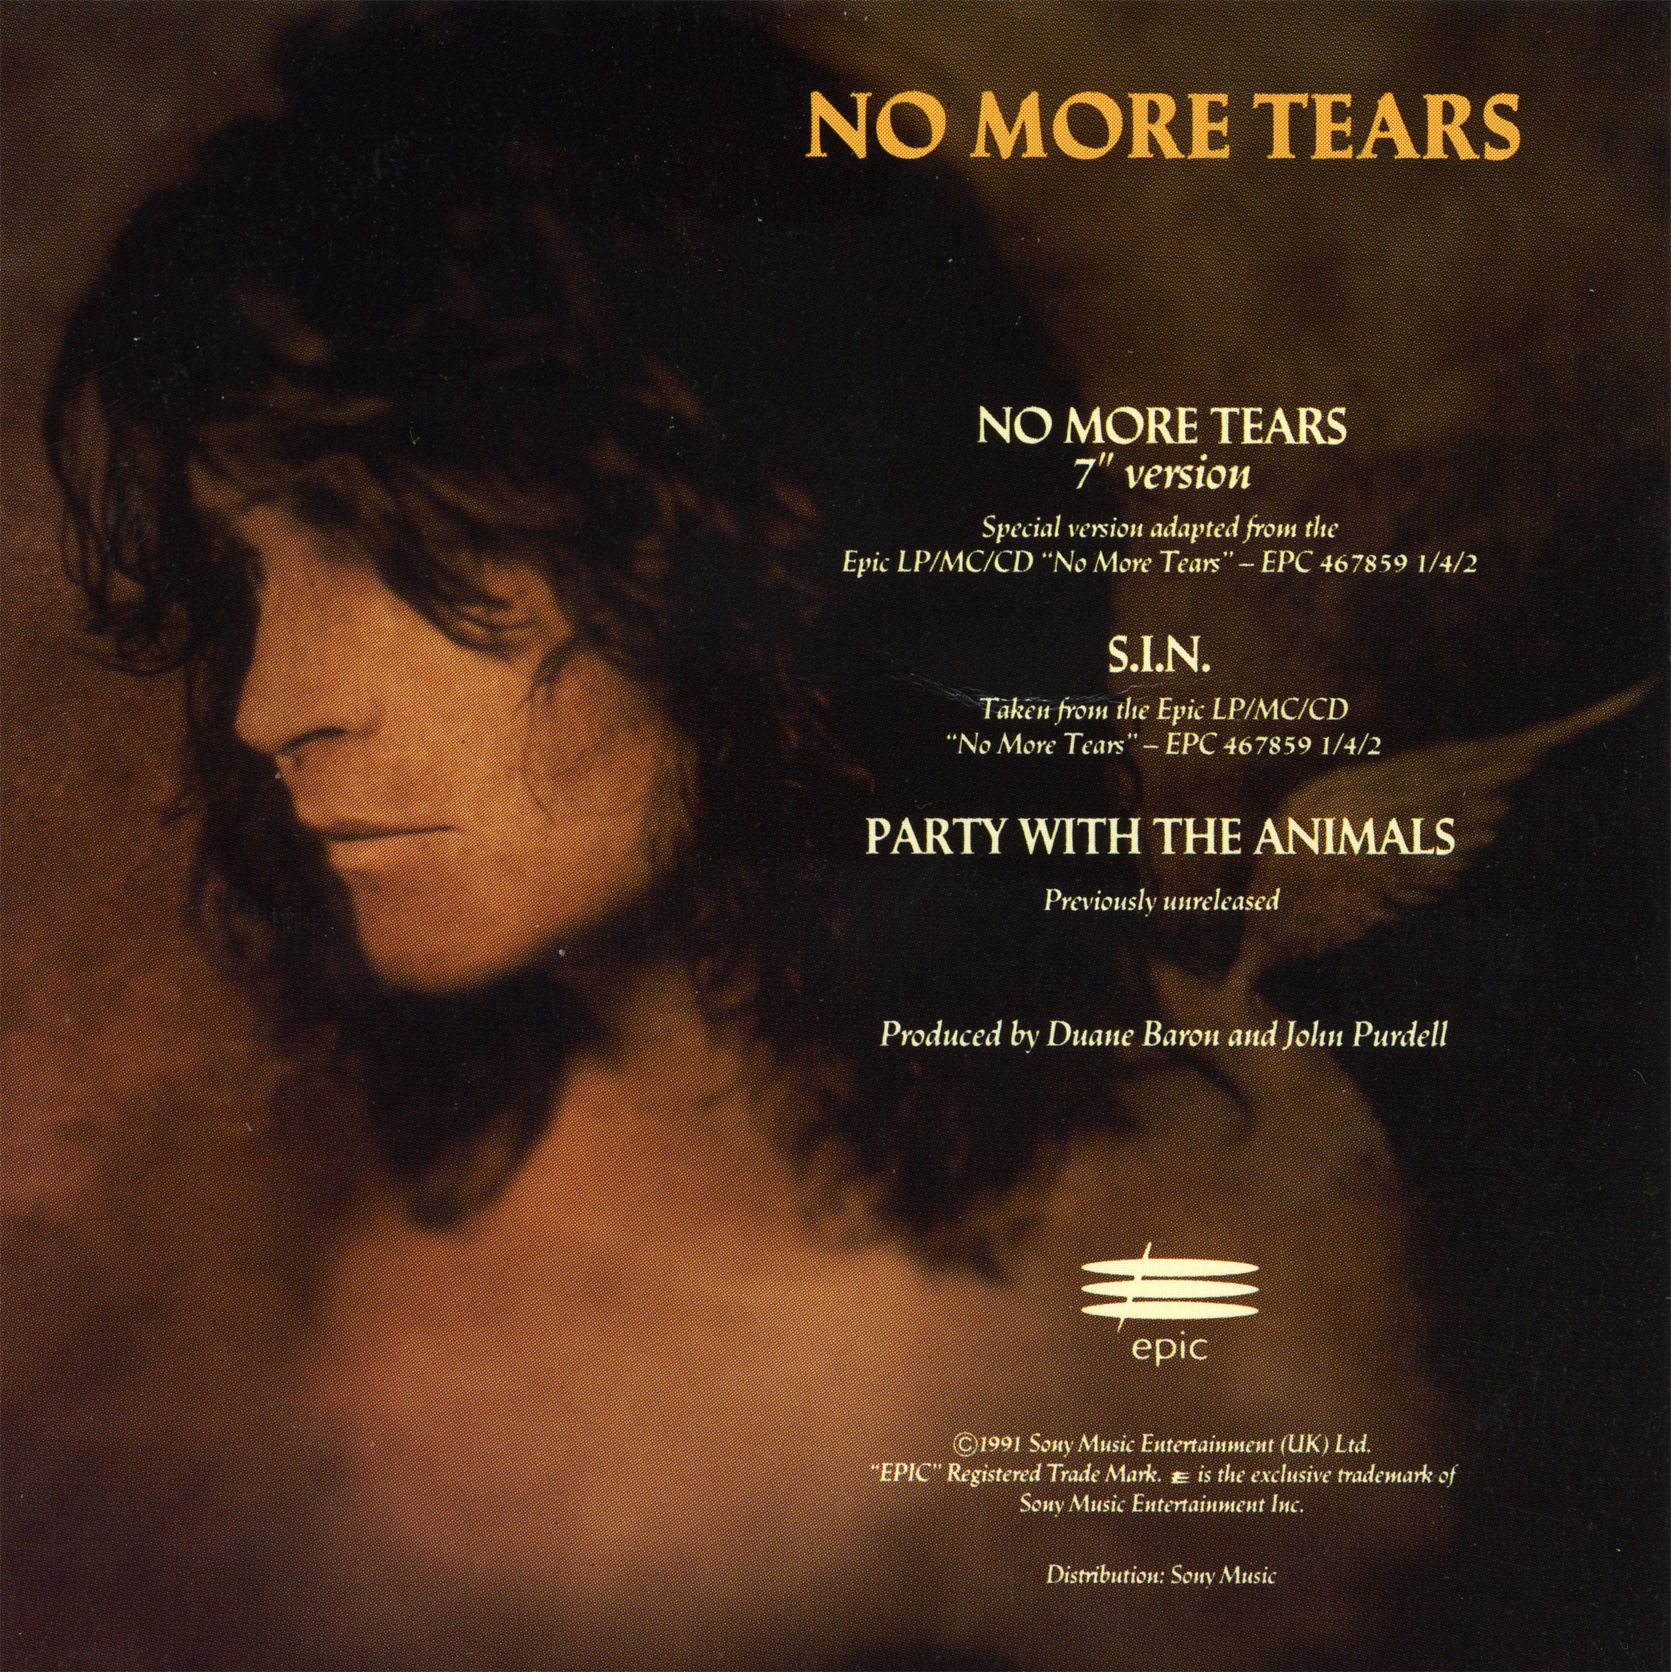 BlooD AnD HonoR MetaL: Ozzy Osbourne - No More Tears (1991) [Single]1671 x 1672